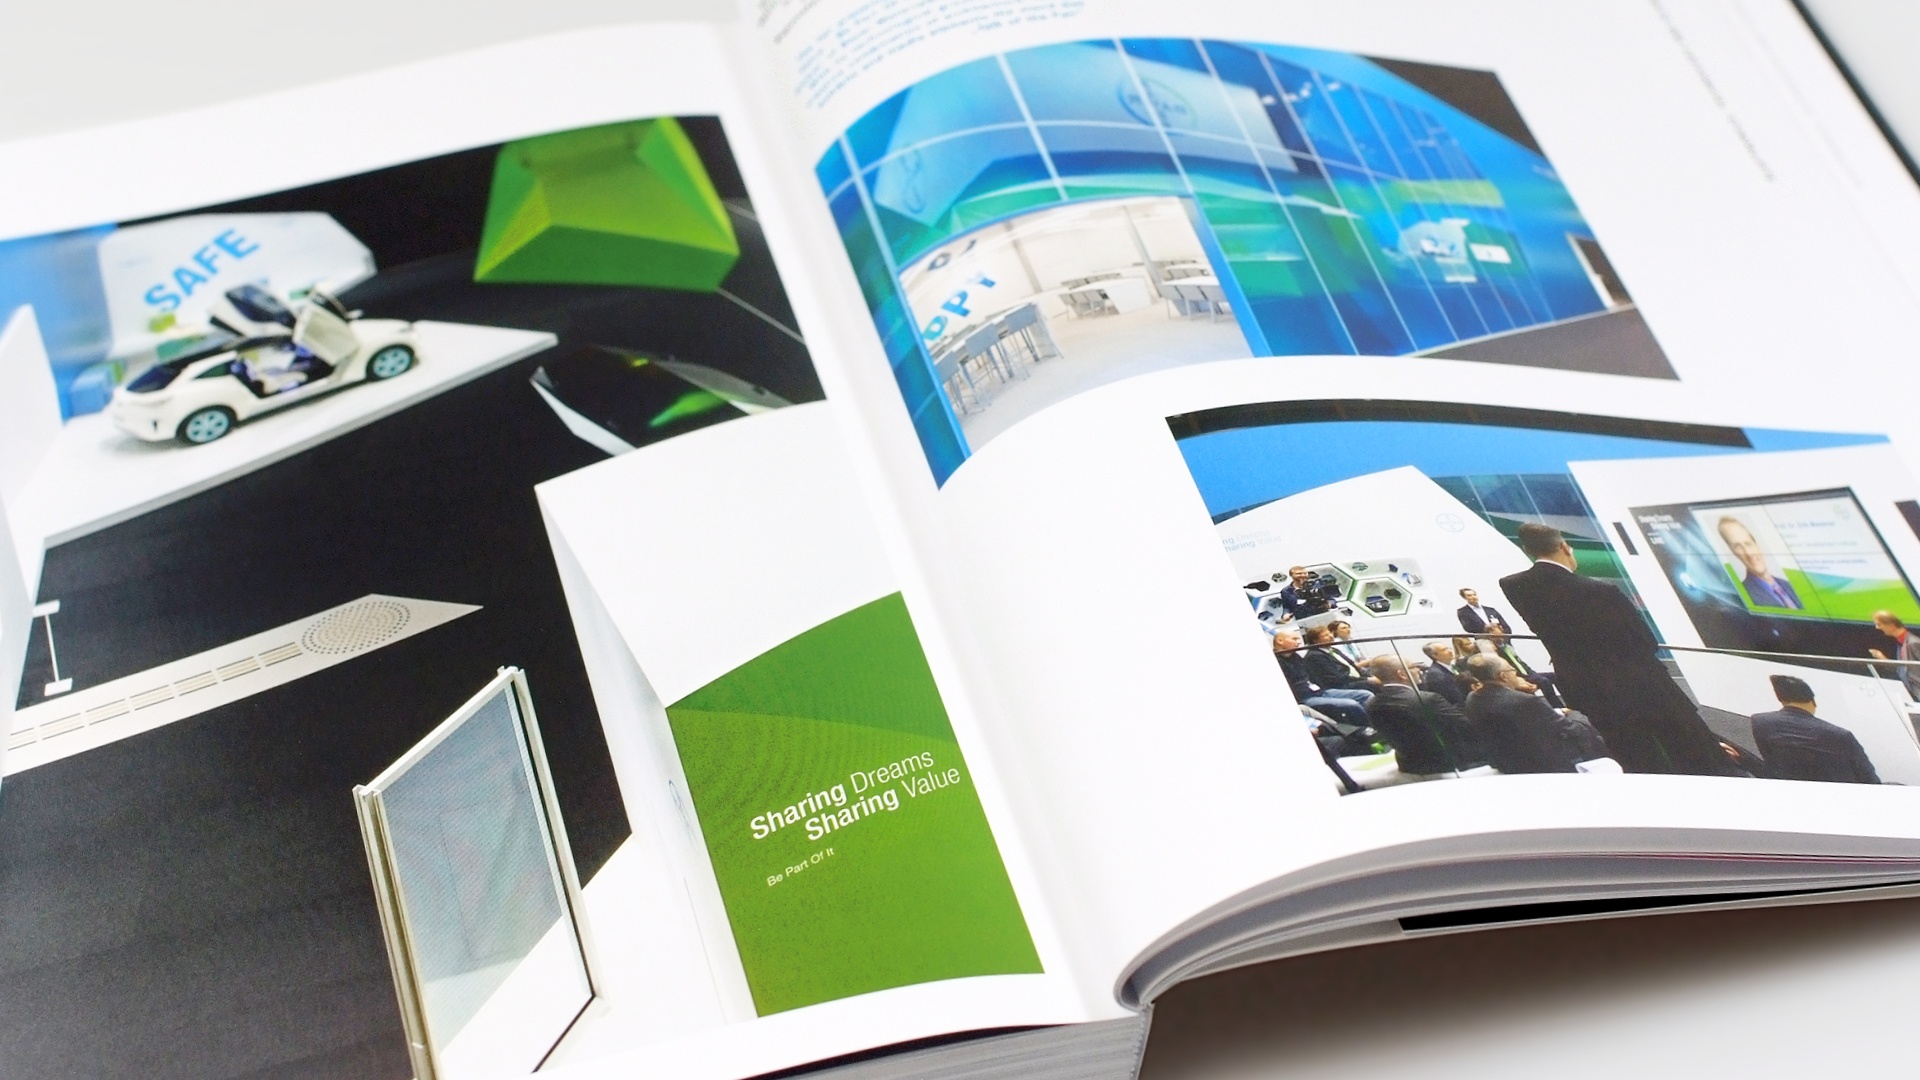 Phocus Brand Contact im Messedesign Jahrbuch 2014/2015